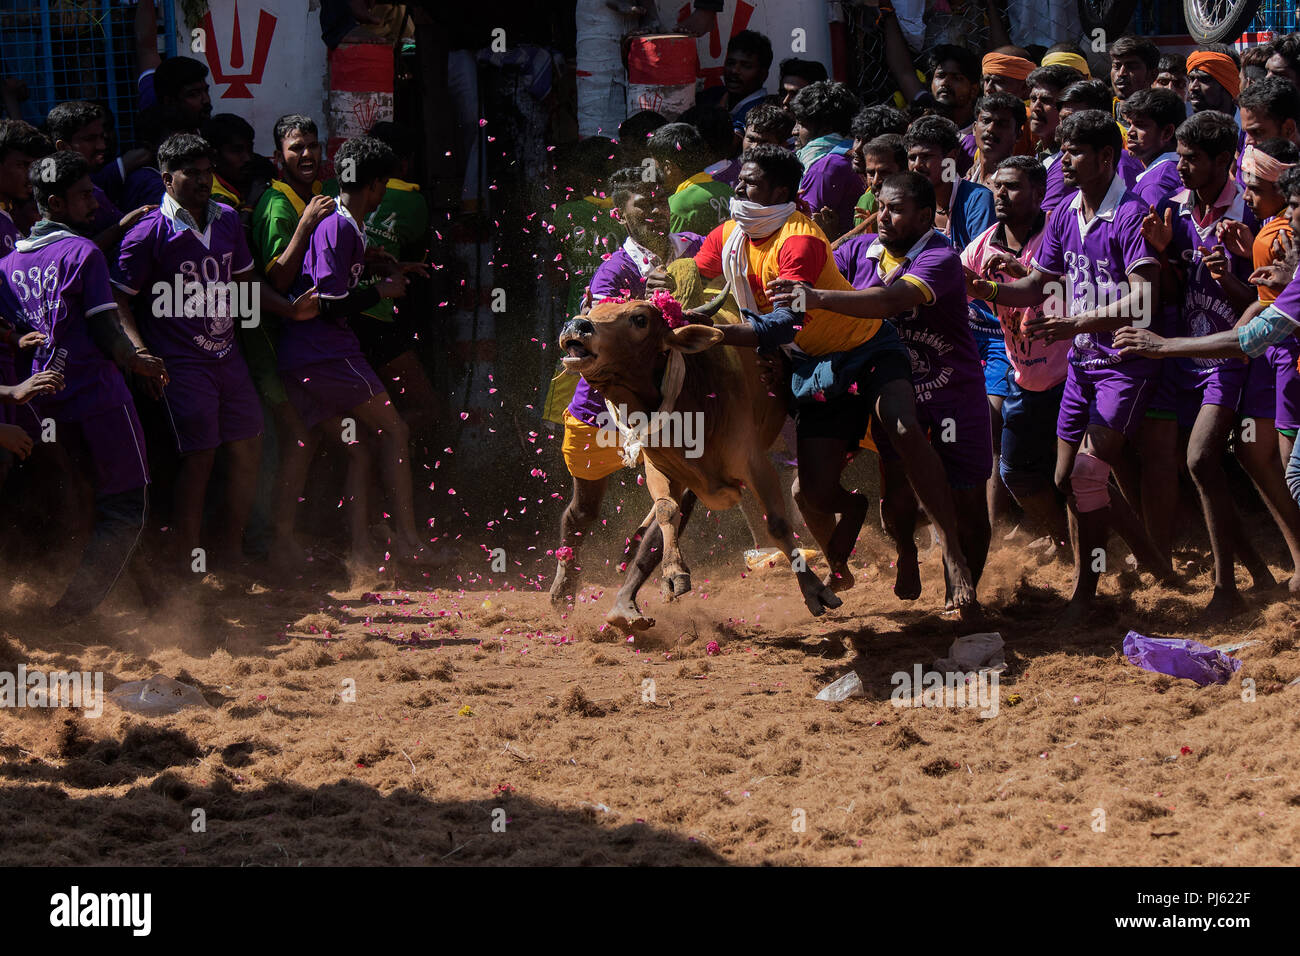 The image of Jallikattu (Bull Taming Festival) celebrated across Tamilnadu as part of the cultural celebration in Madurai, India Stock Photo